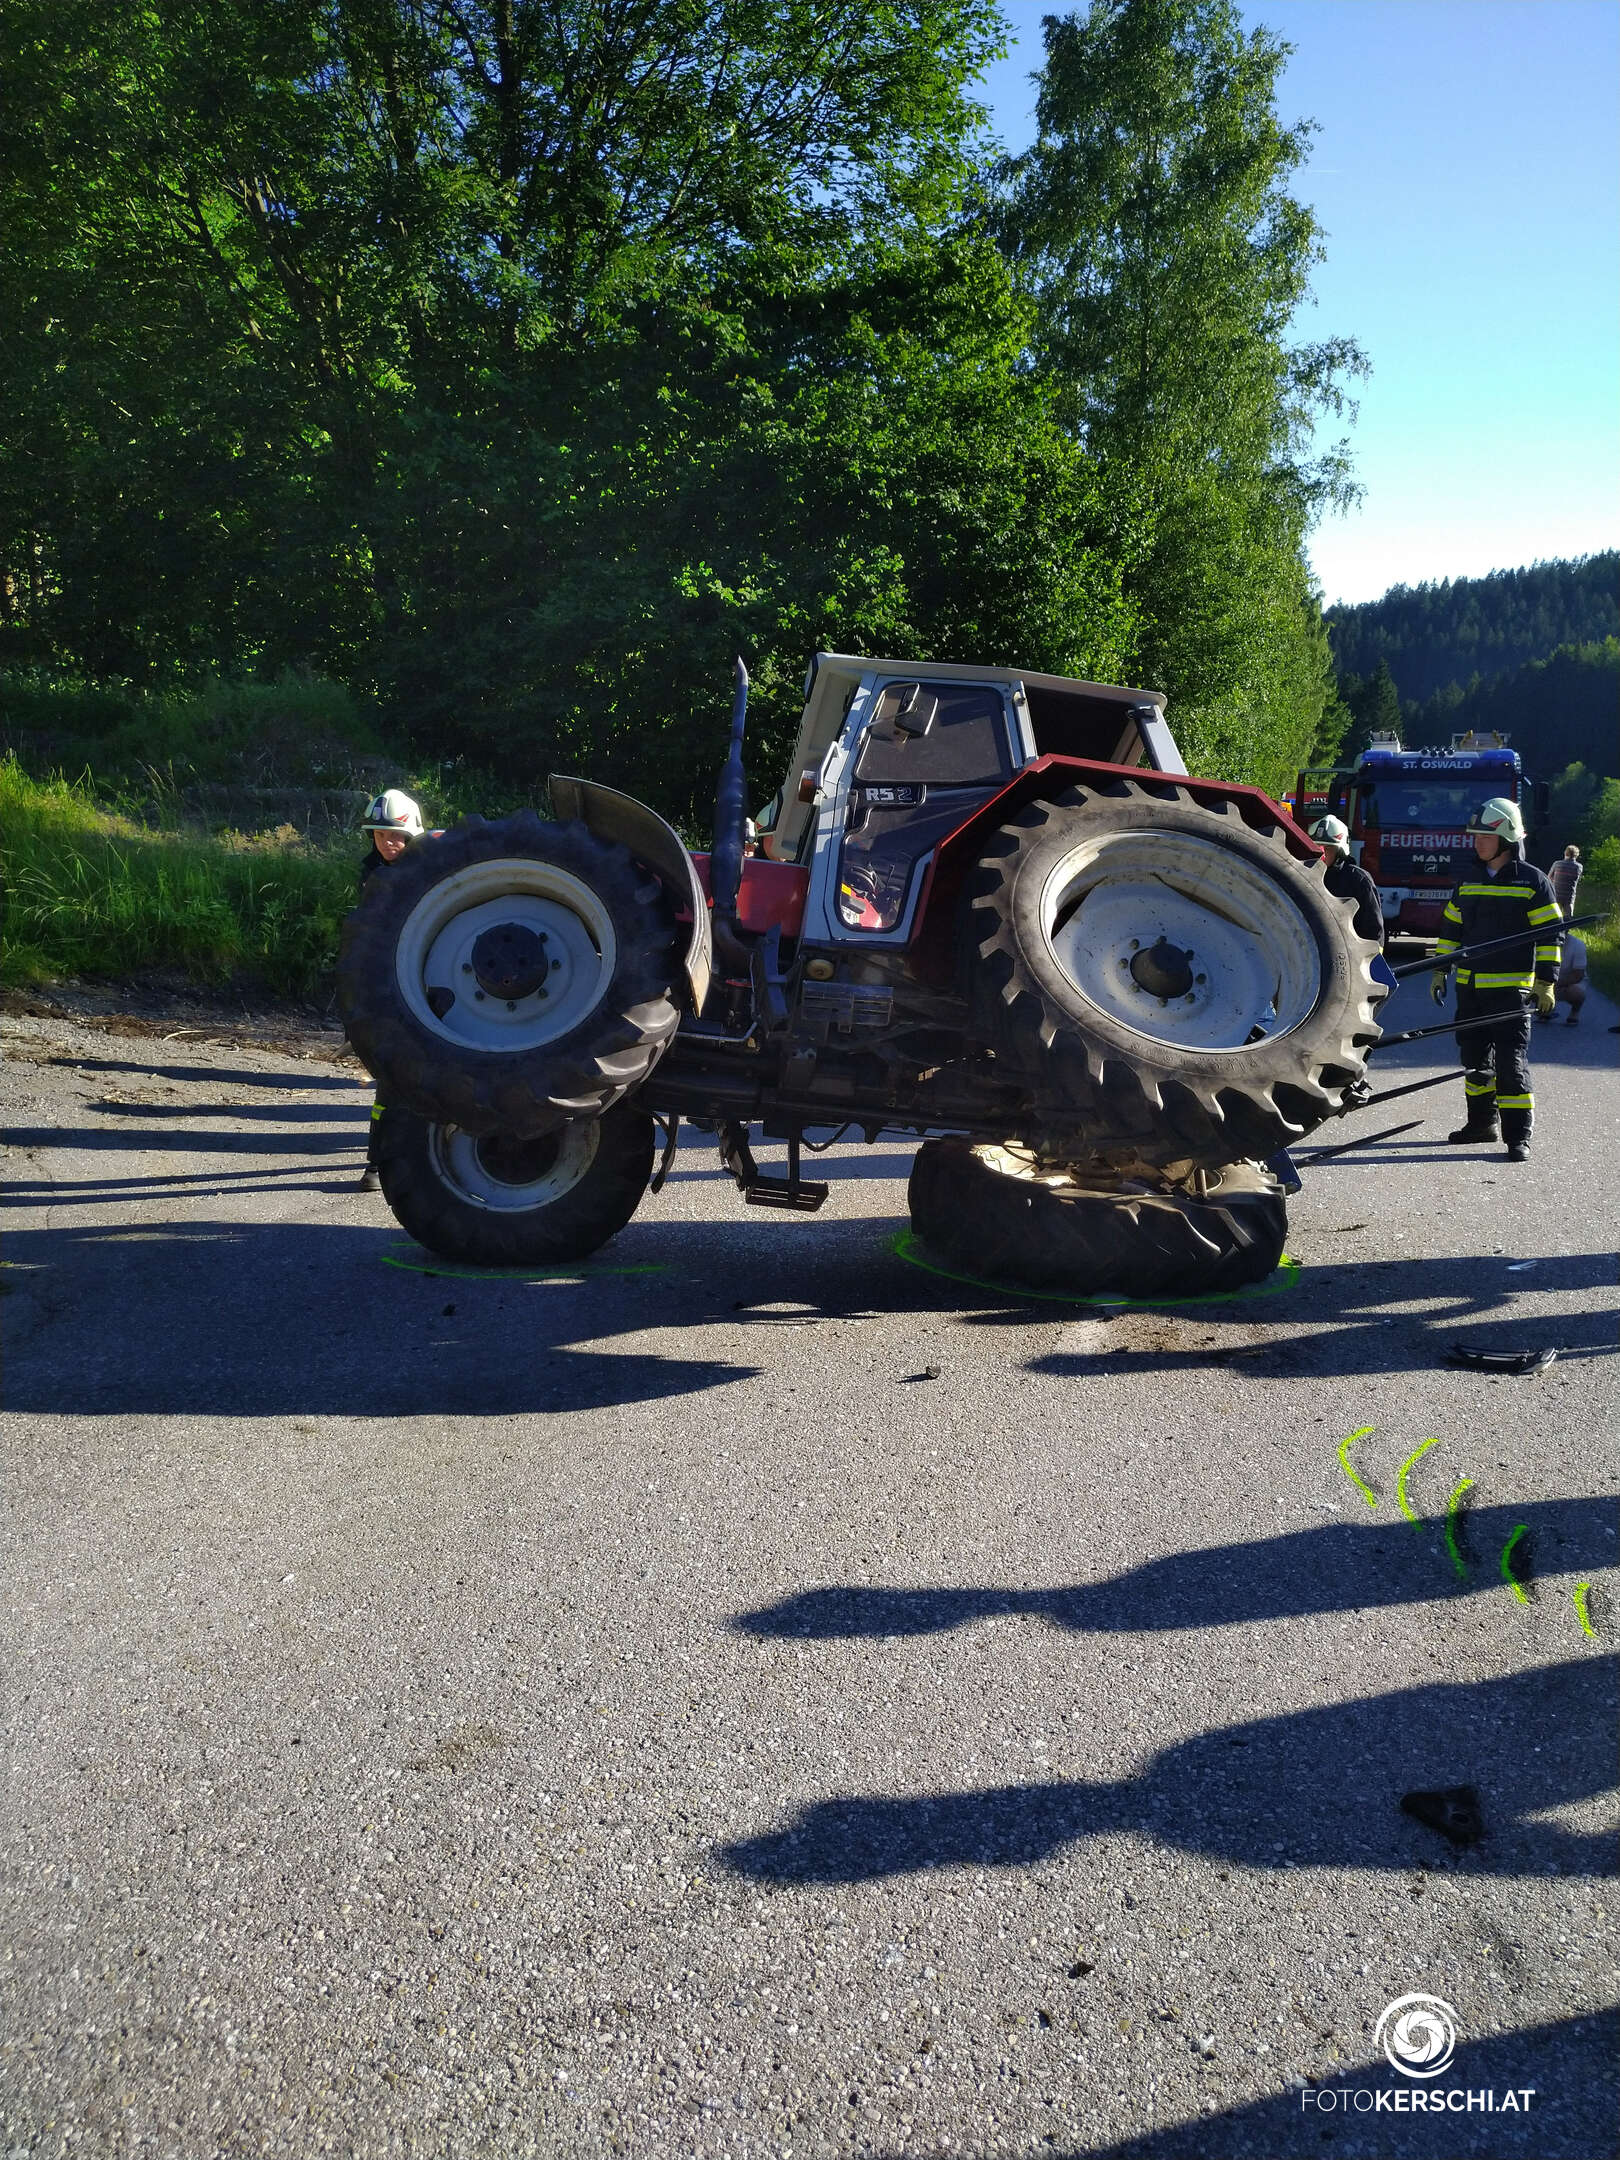 Pkw kollidierte mit Traktor